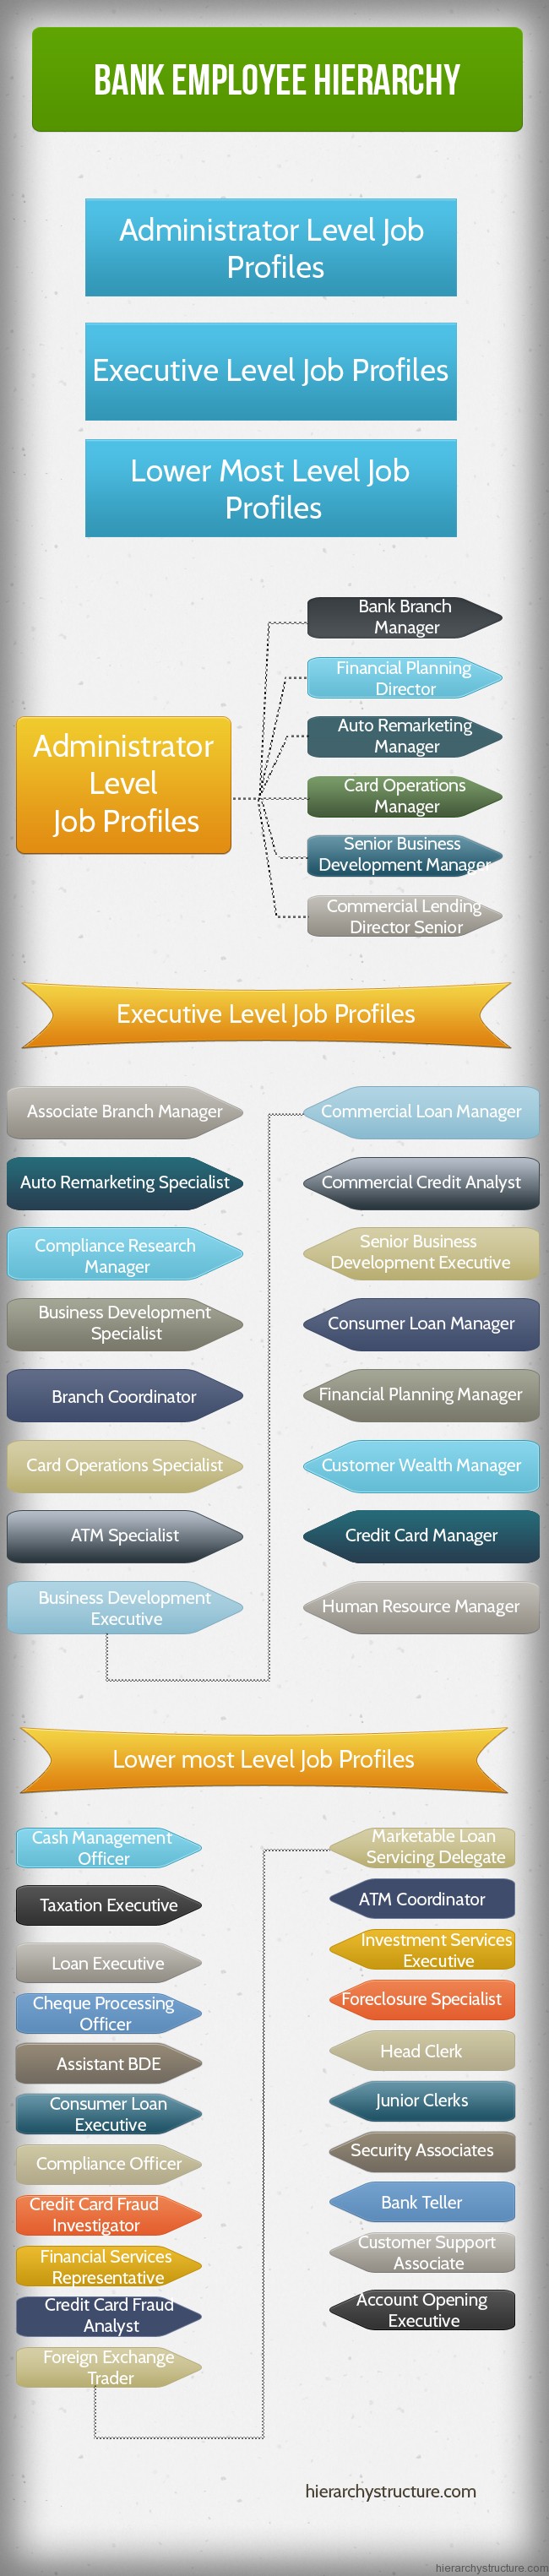 Bank Employee Hierarchy